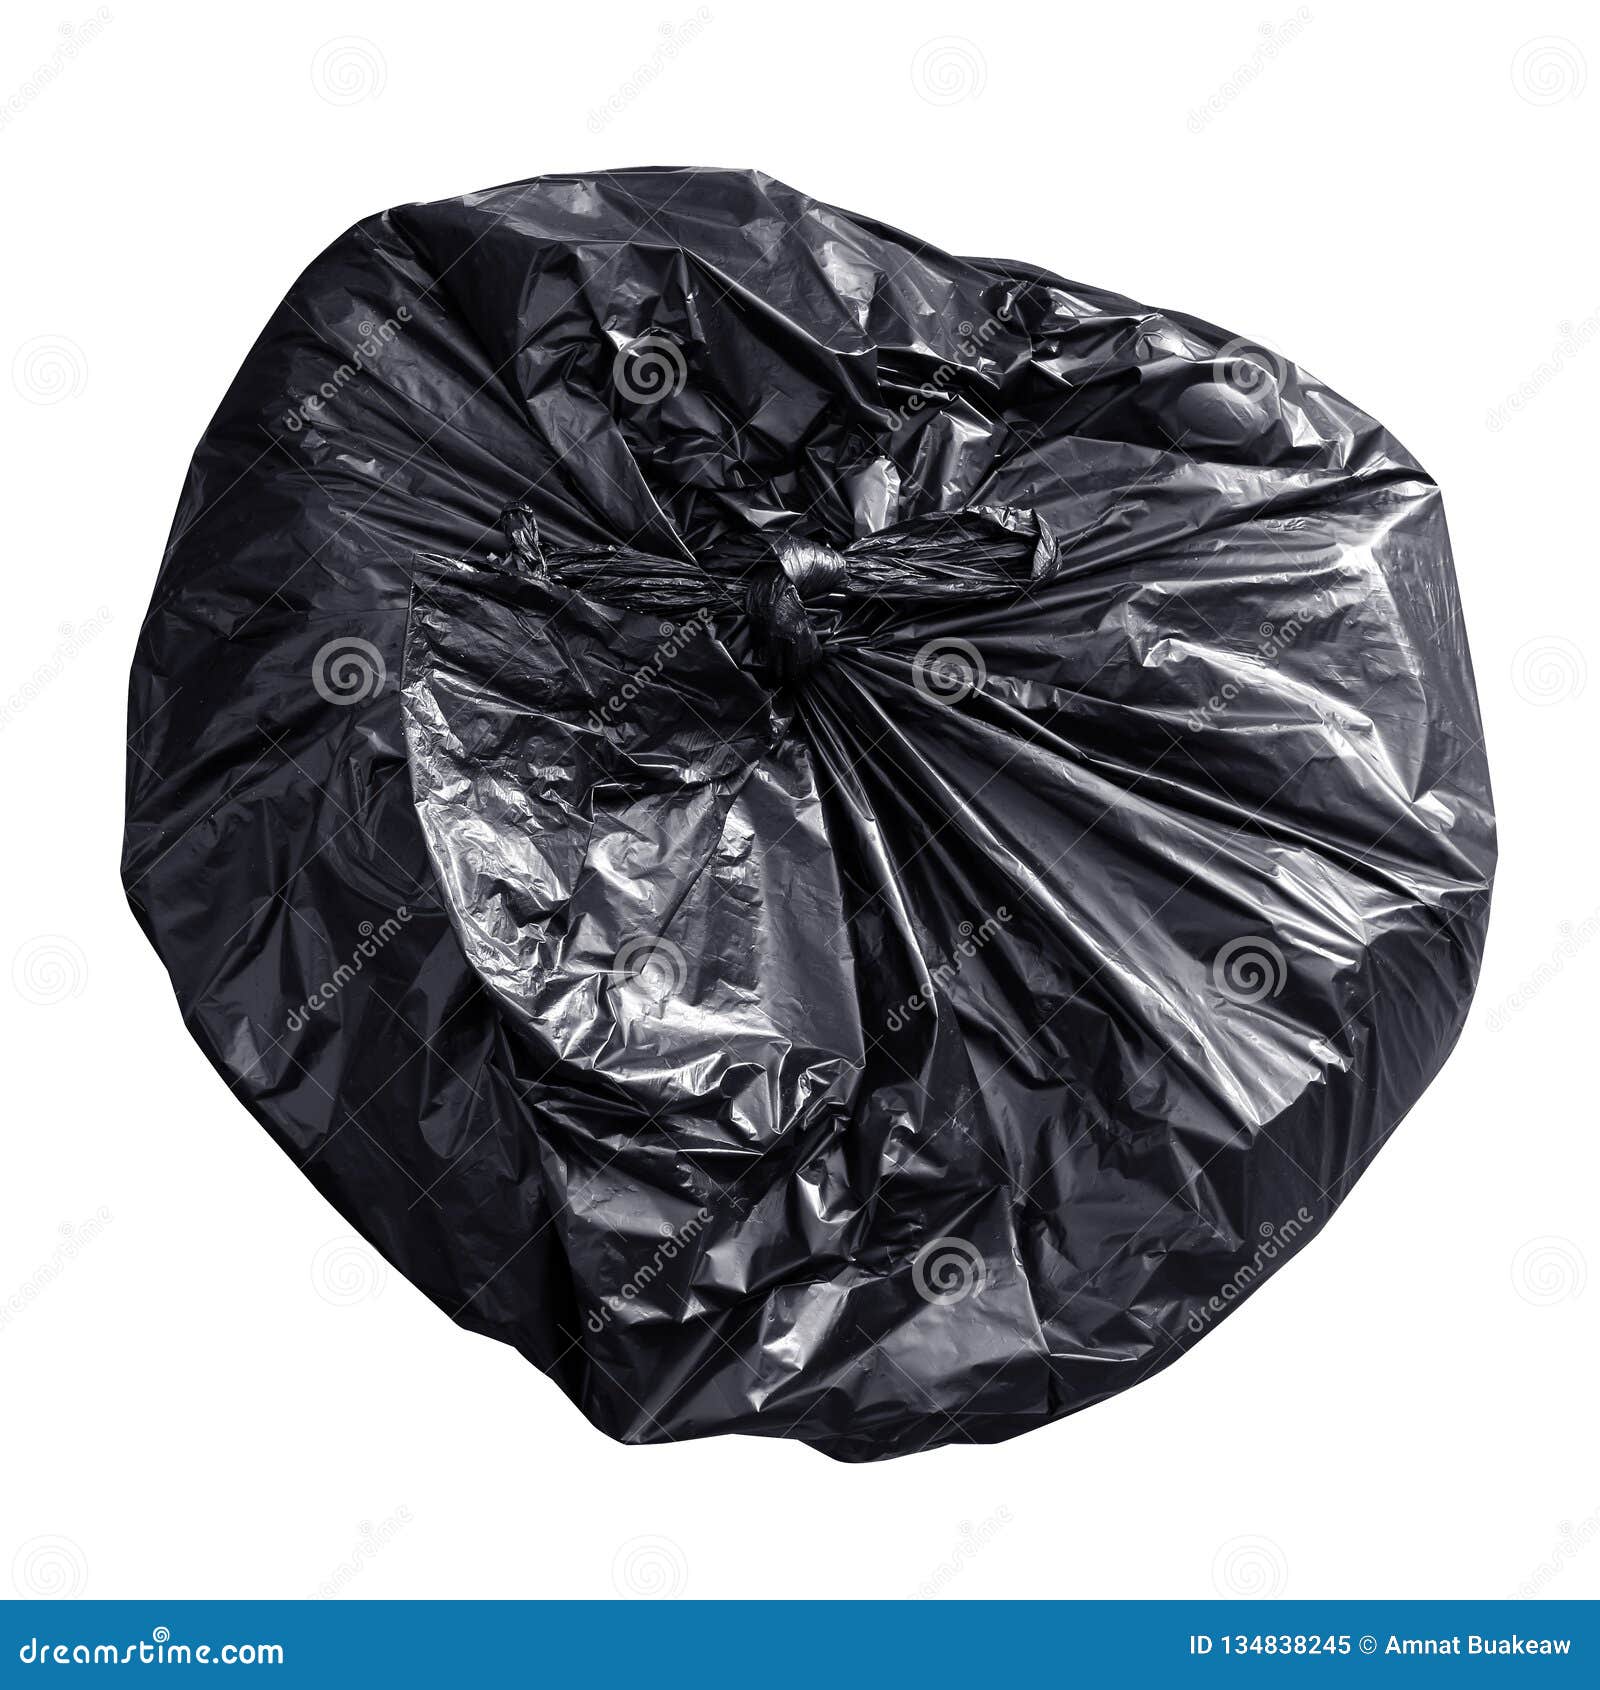 Garbage Plastic Bag Black Isolated On White Background